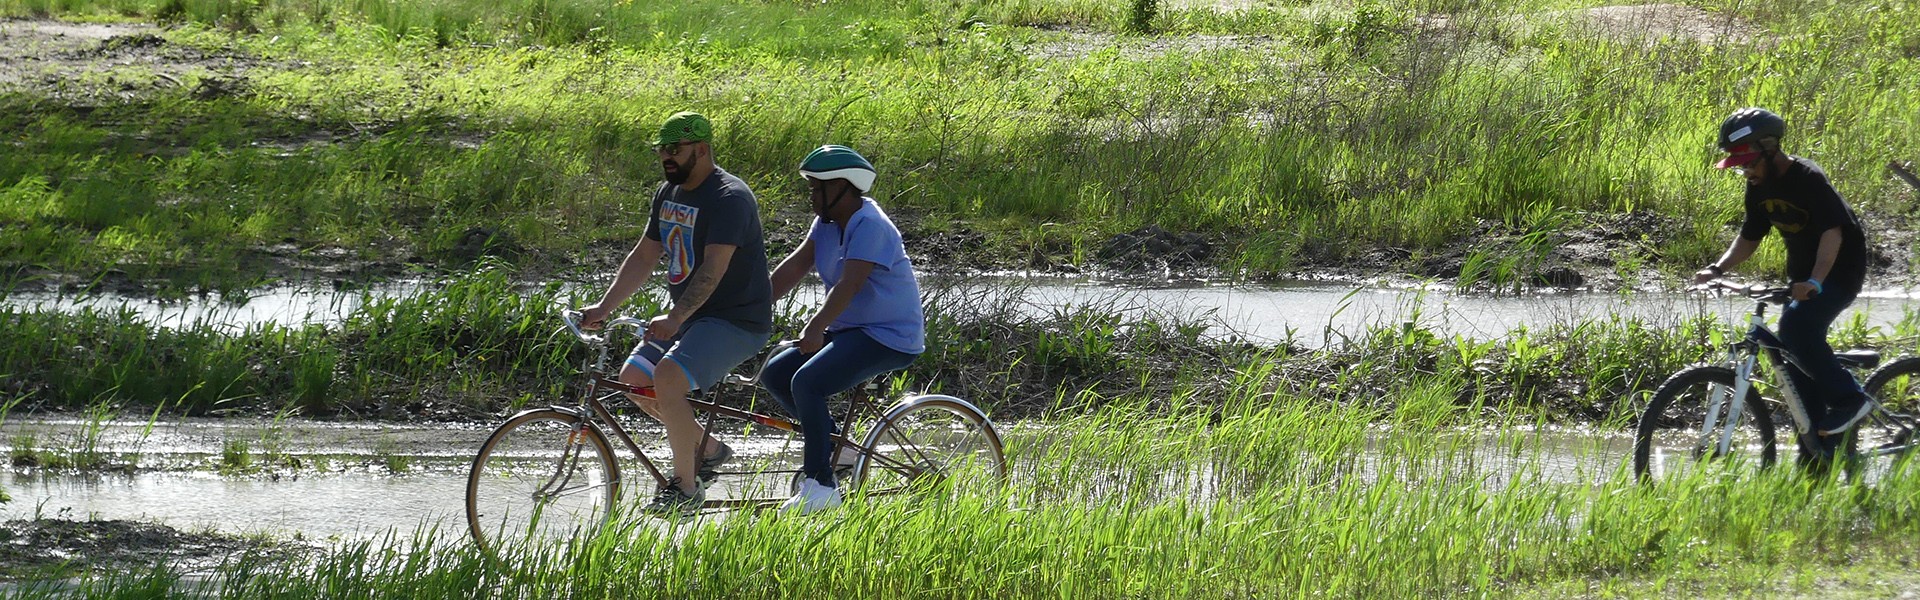 Cyclists at Big Marsh Park